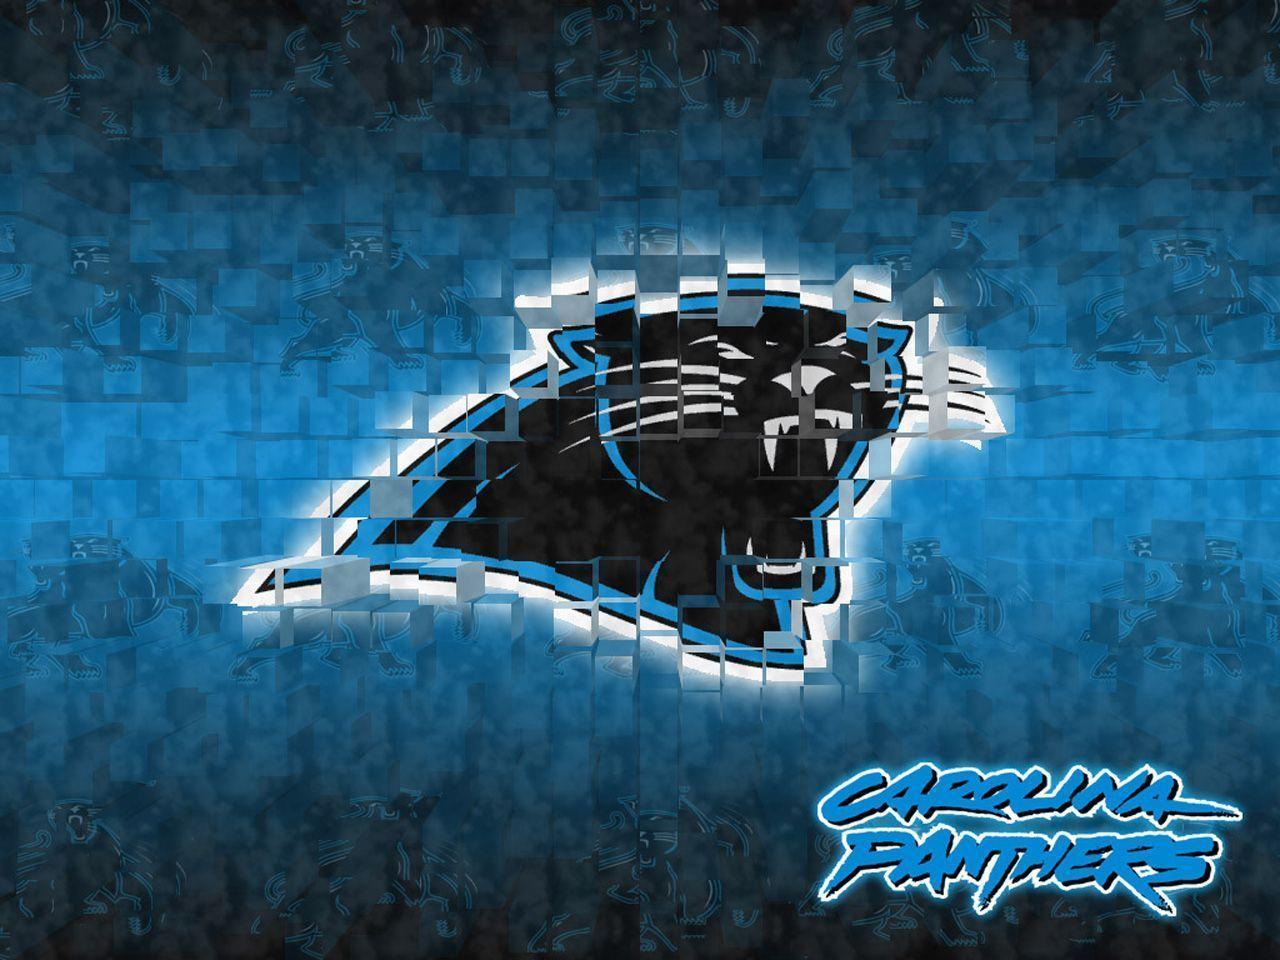 Carolina Panthers Wallpaper HD 69 images